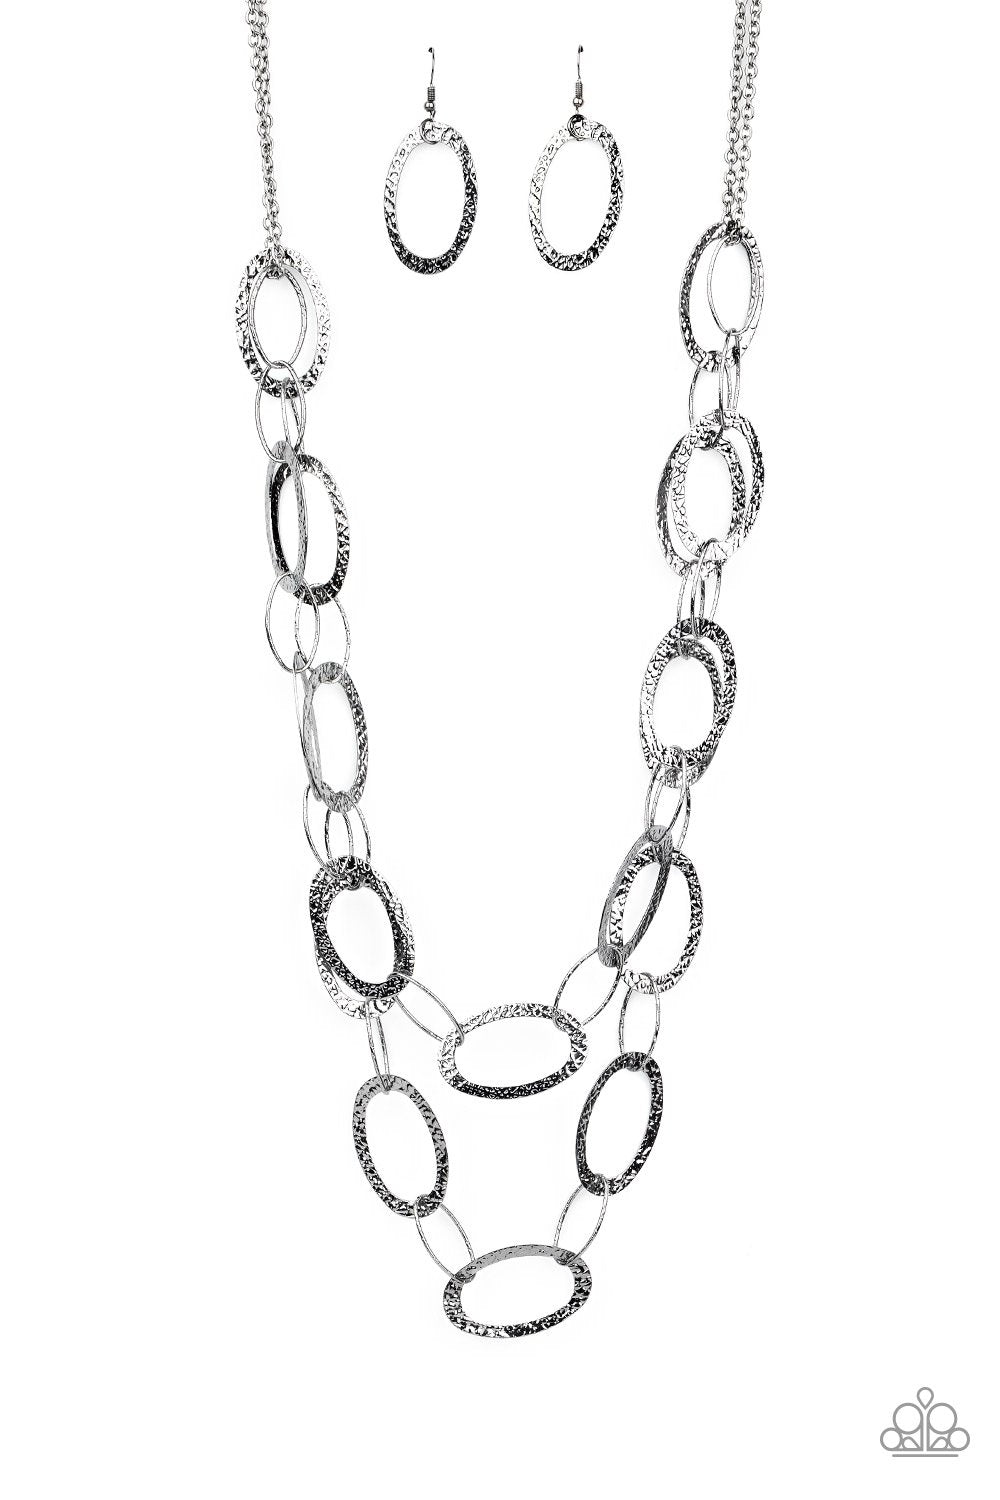 Designer button necklace black & gold #accesories #accesories #20 #grms  #gold #necklace #designs